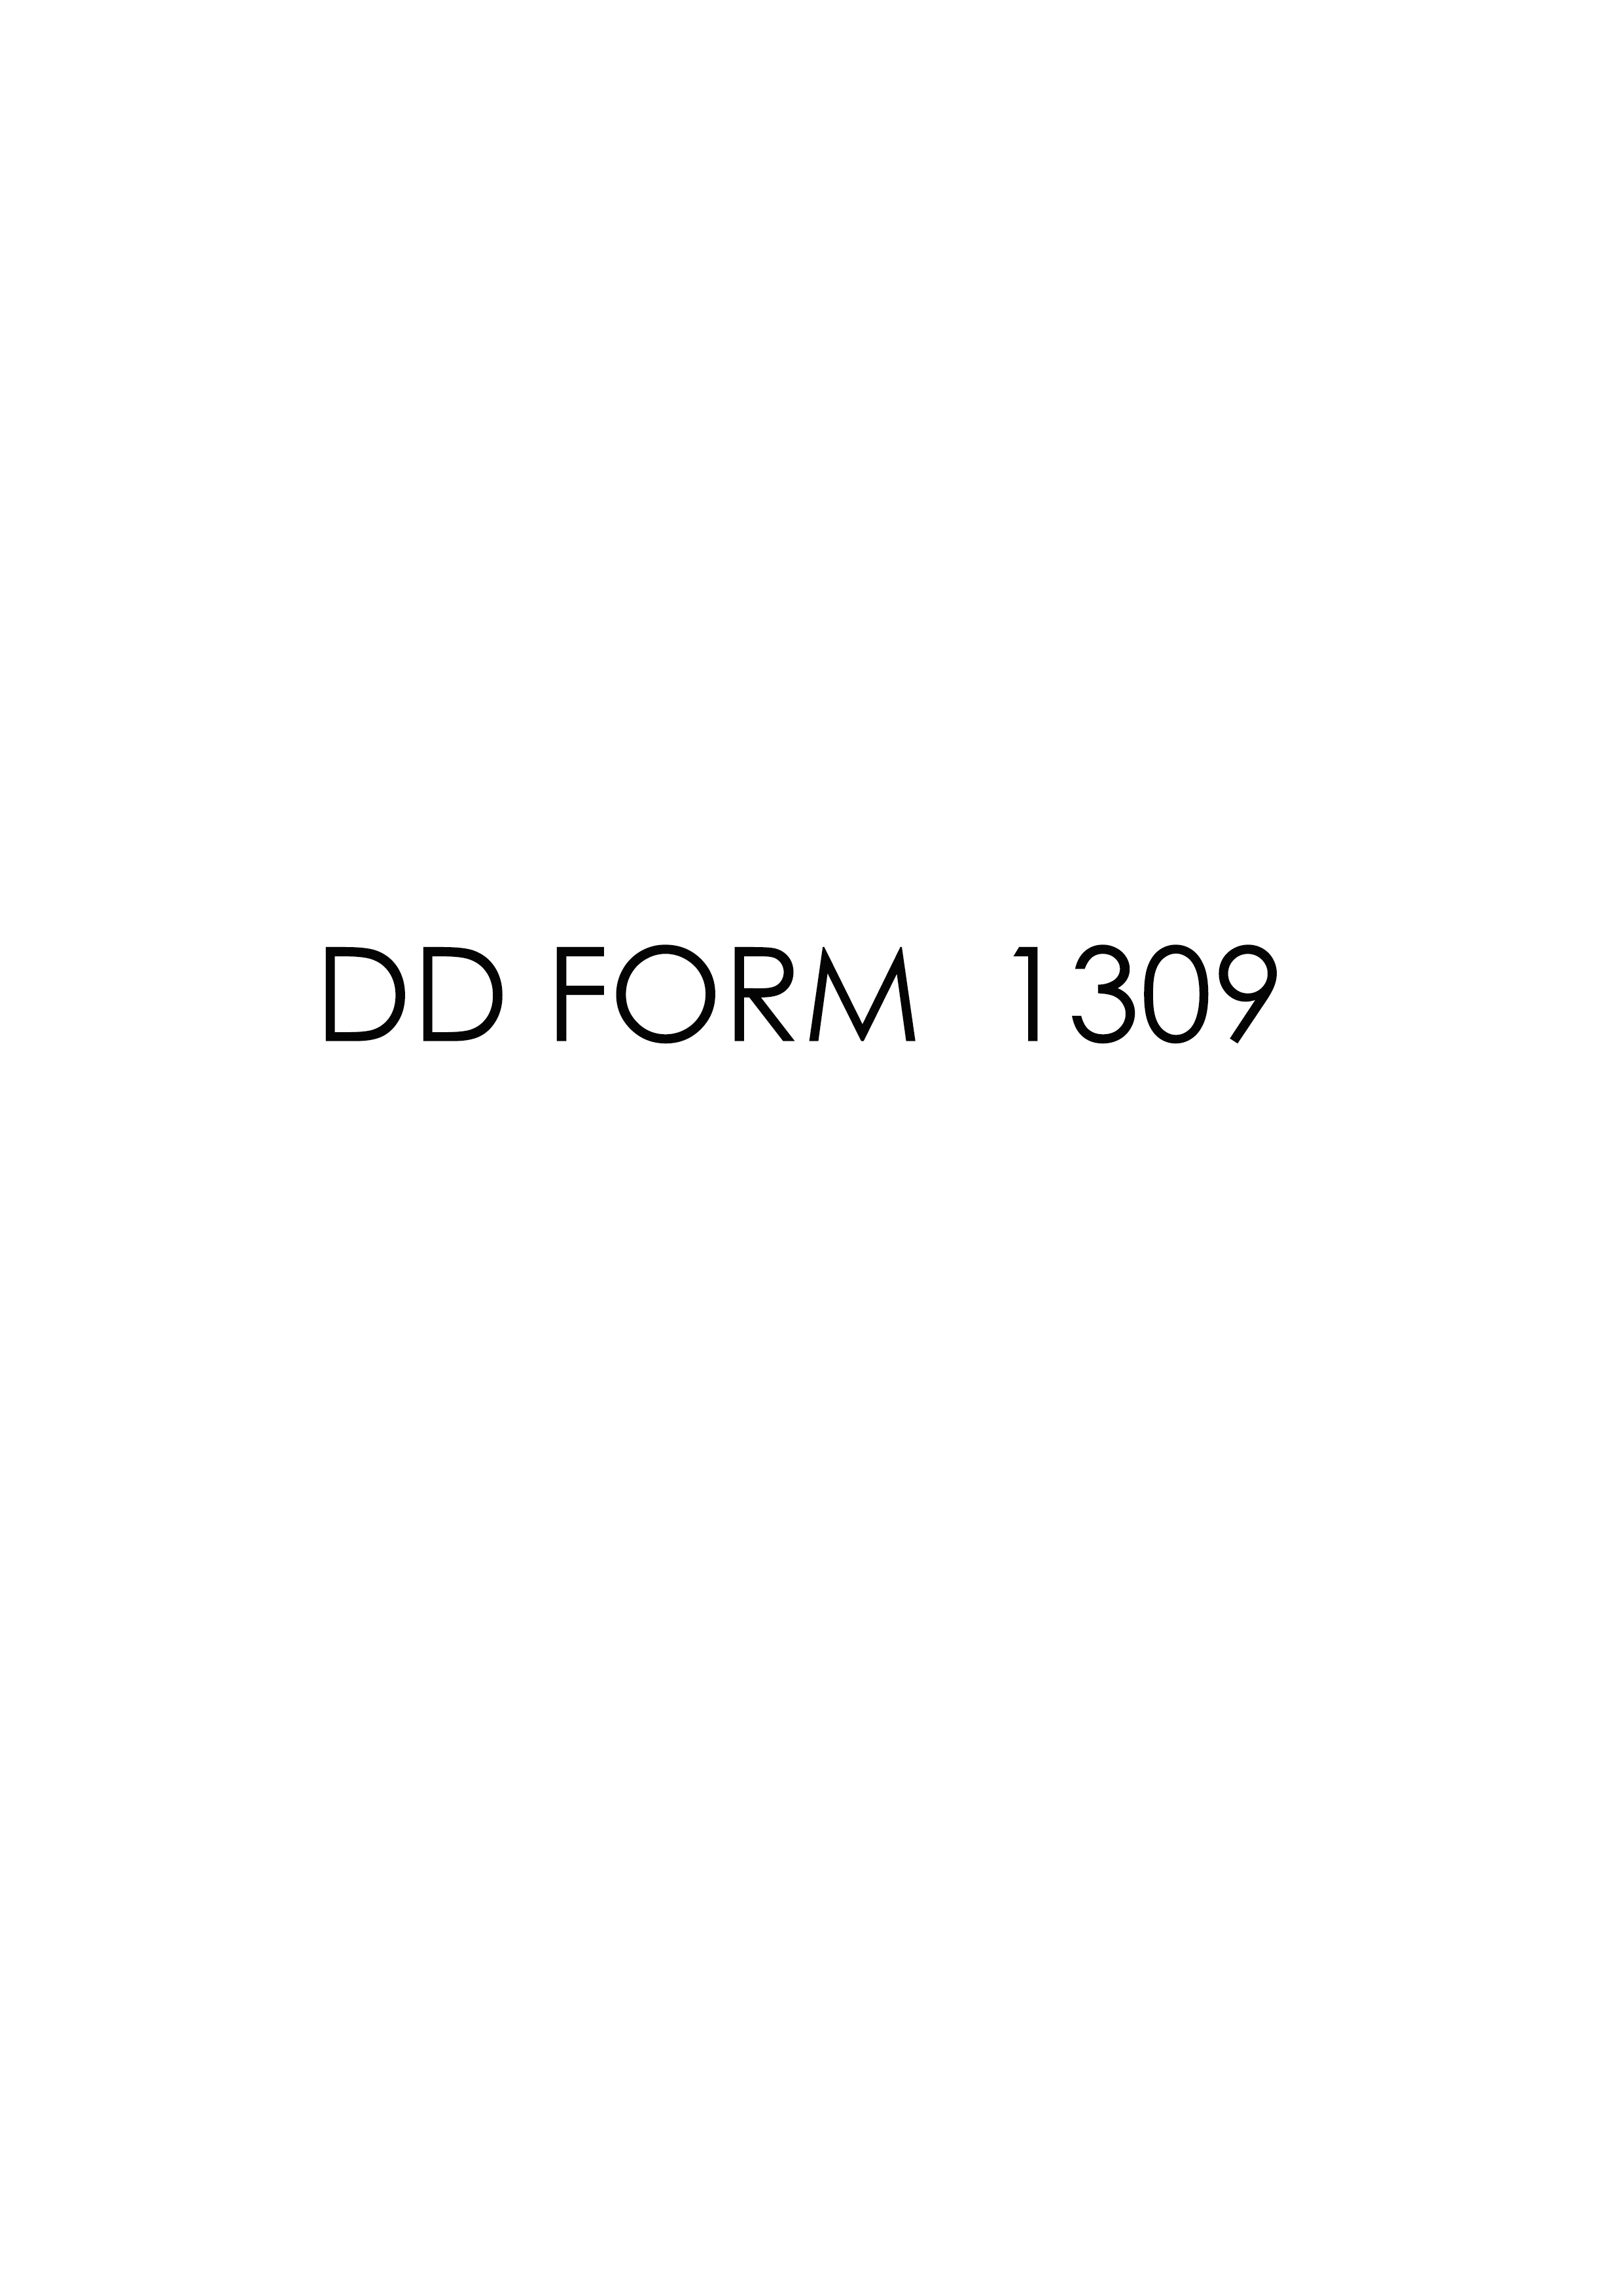 Download dd Form 1309